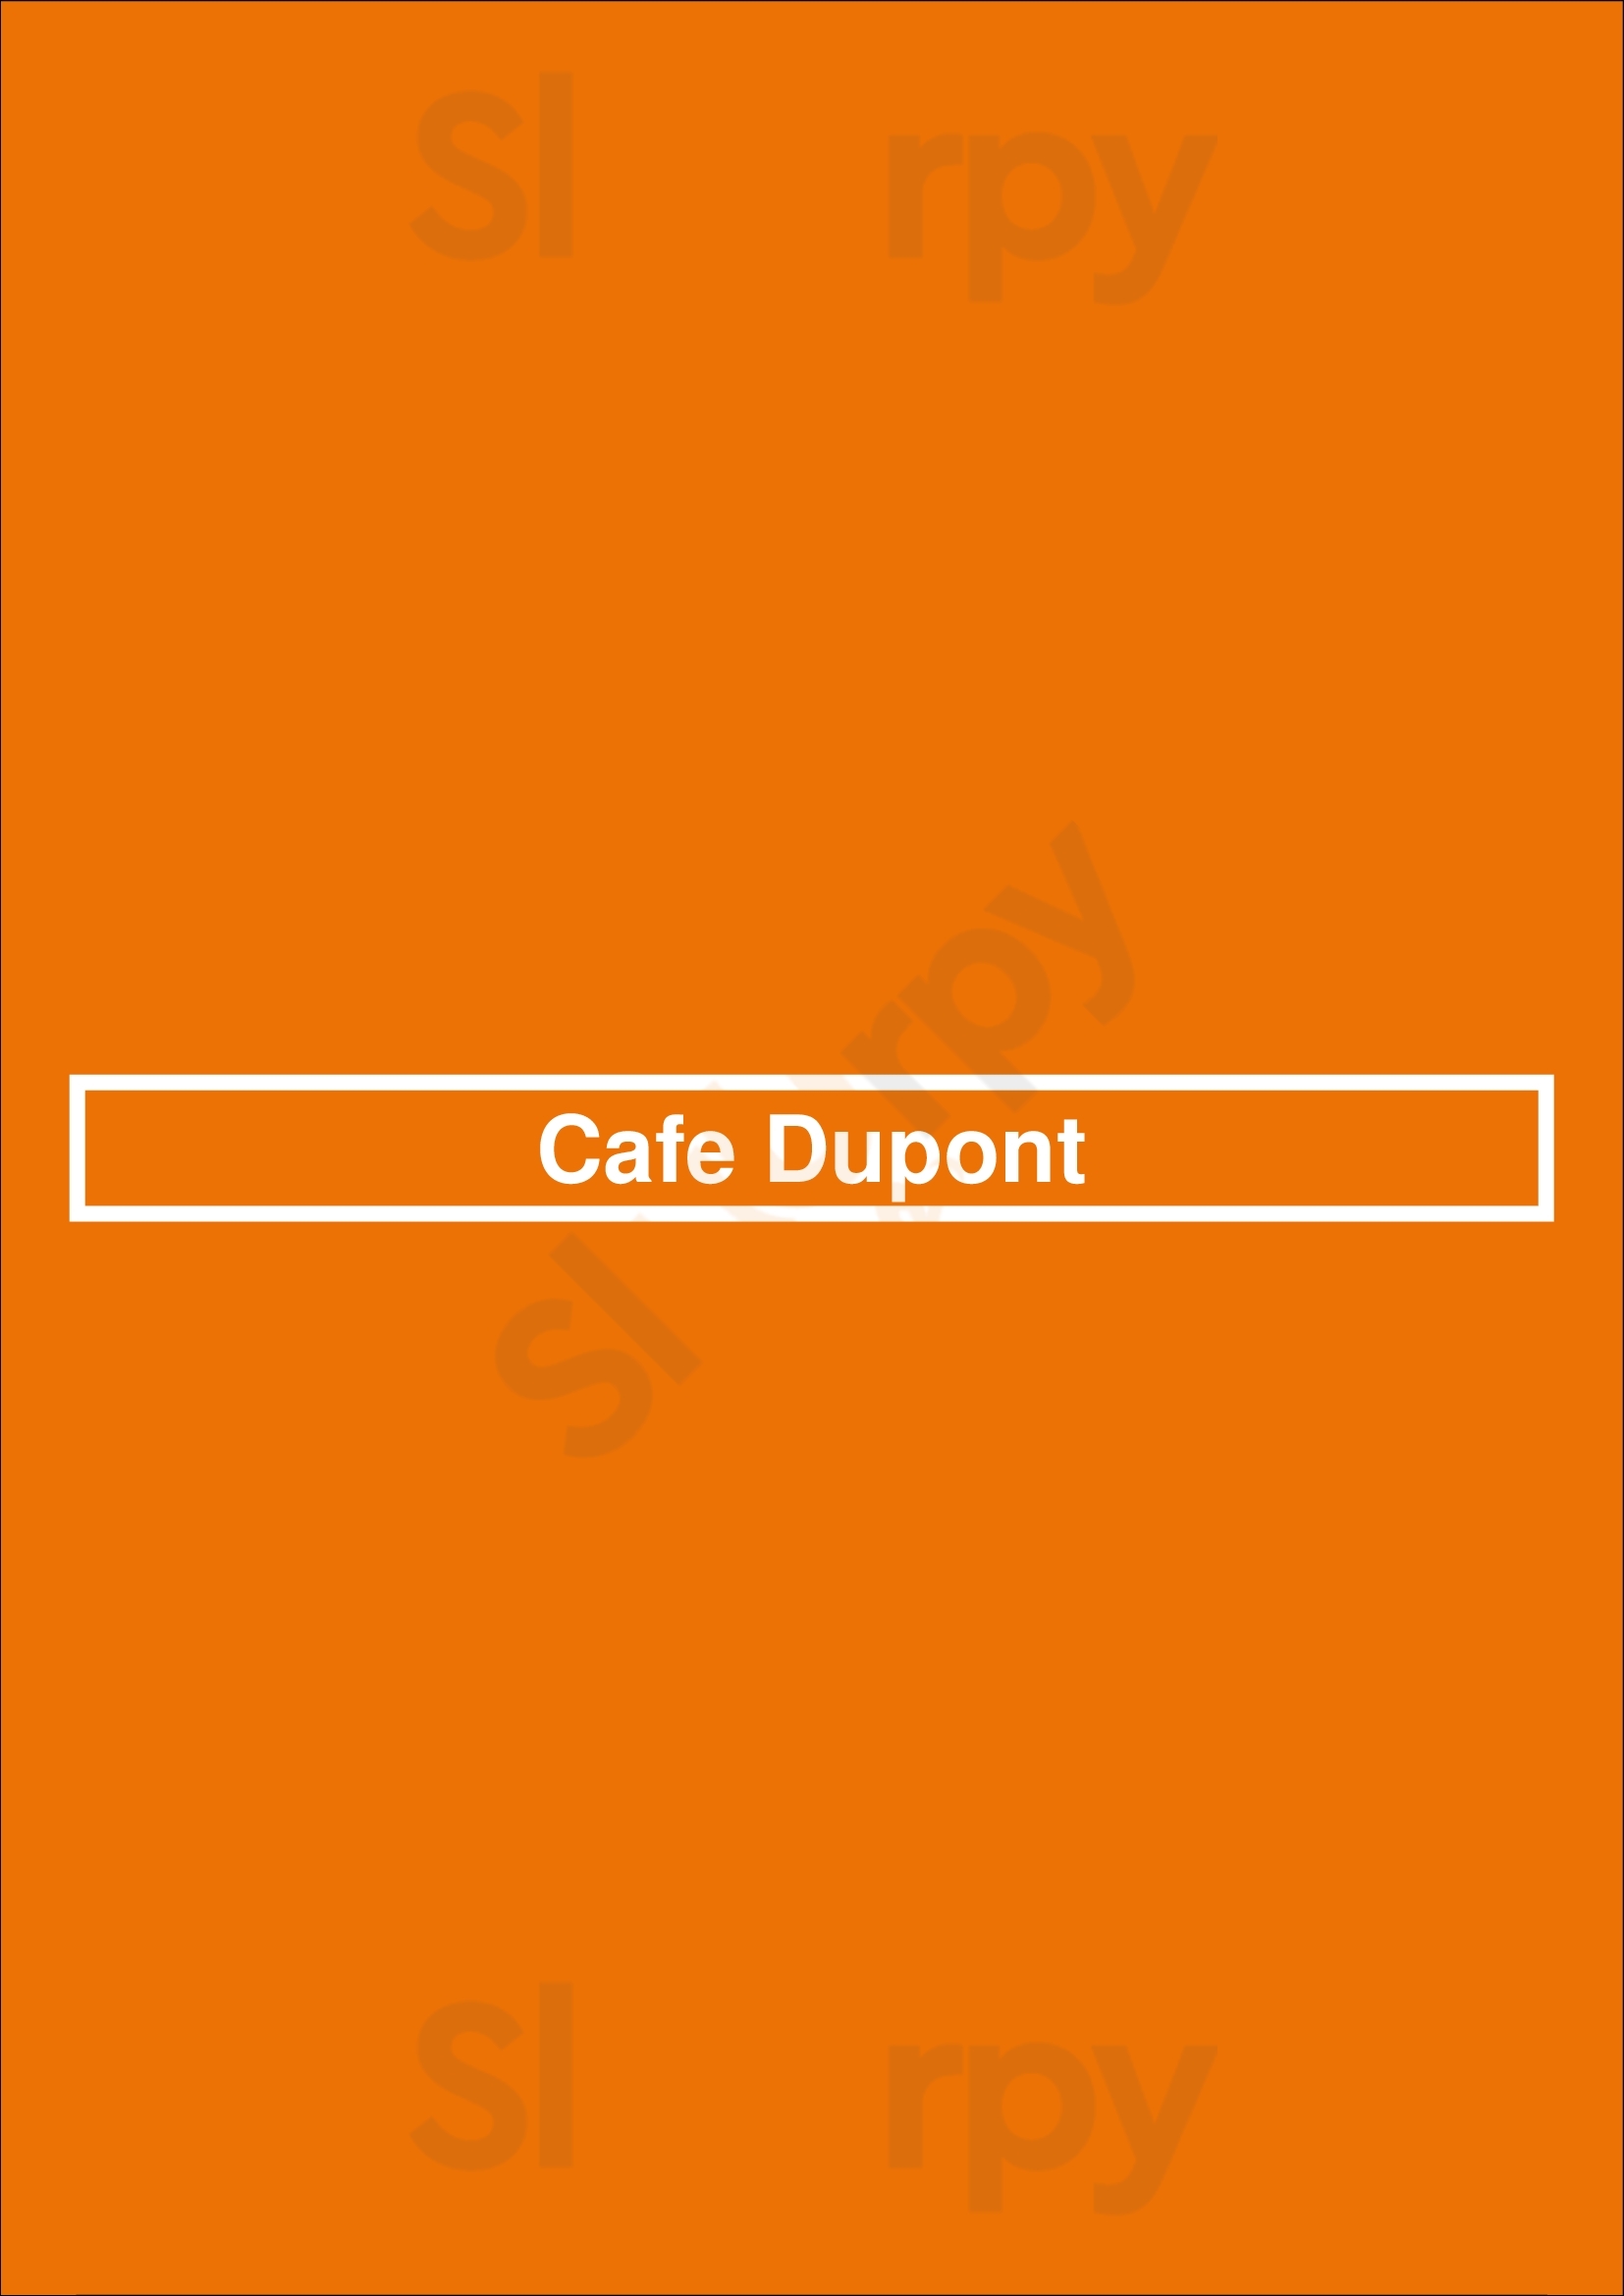 Cafe Dupont Birmingham Menu - 1